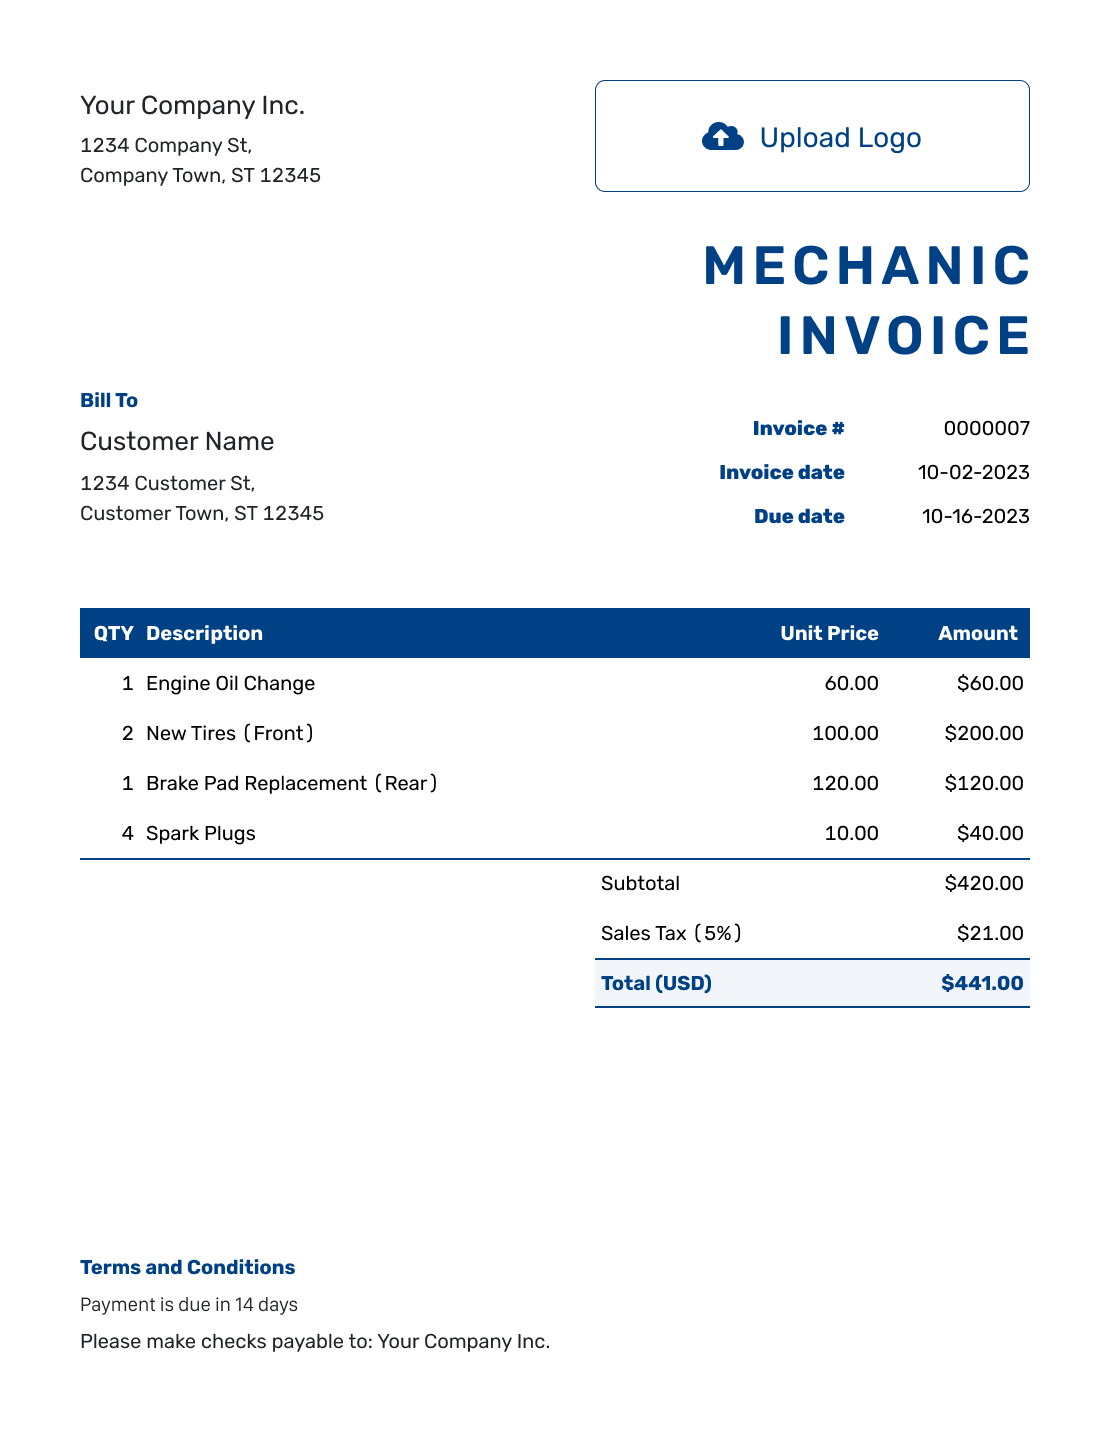 Sample Mechanic Invoice Template